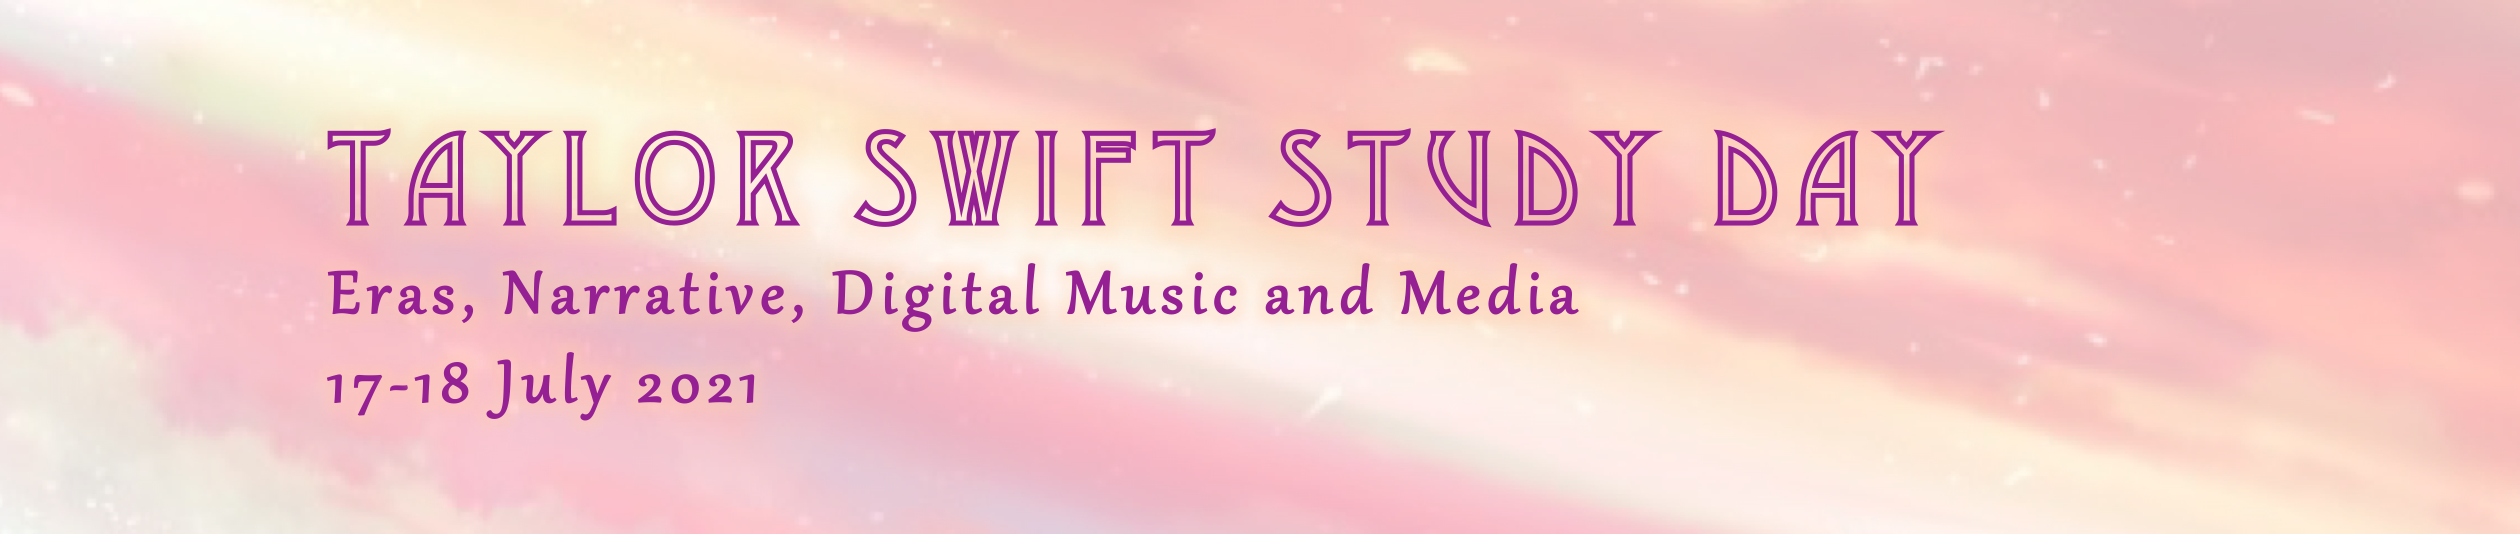 Taylor Swift Study Day July 17-18 2021